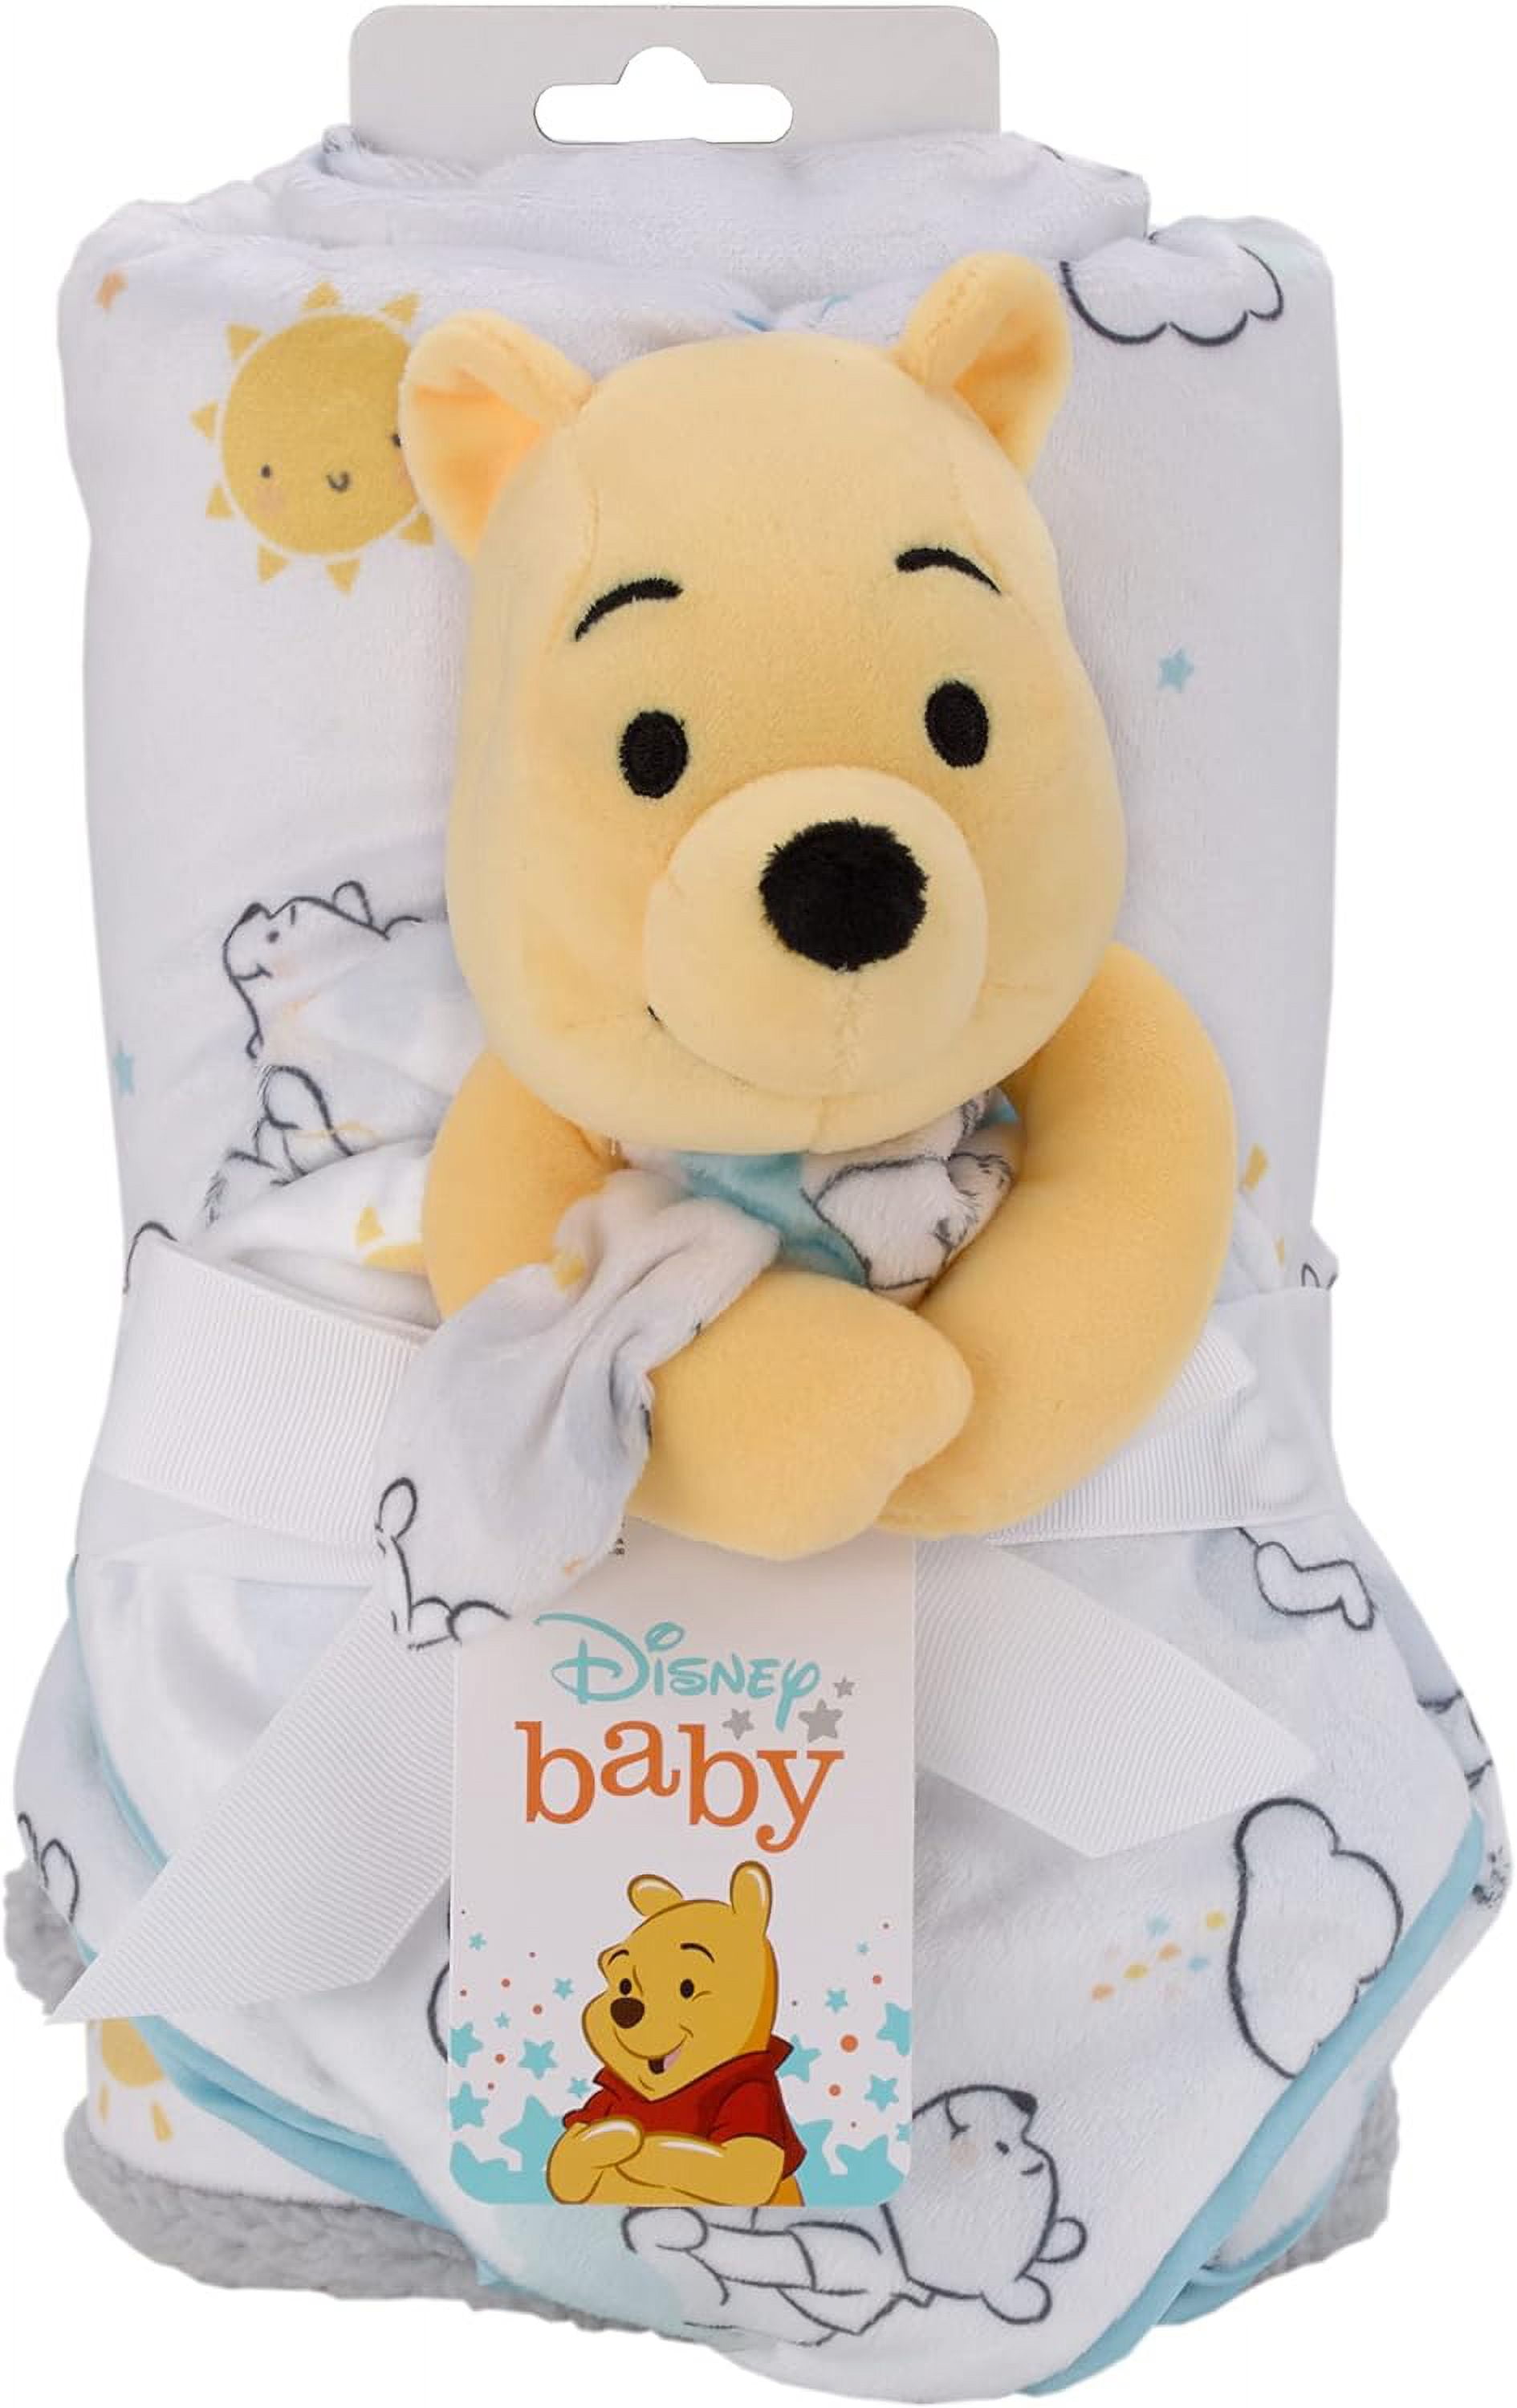 Disney Blanket , Twin Blanket Size 55x80, Winnie the Pooh Blanket